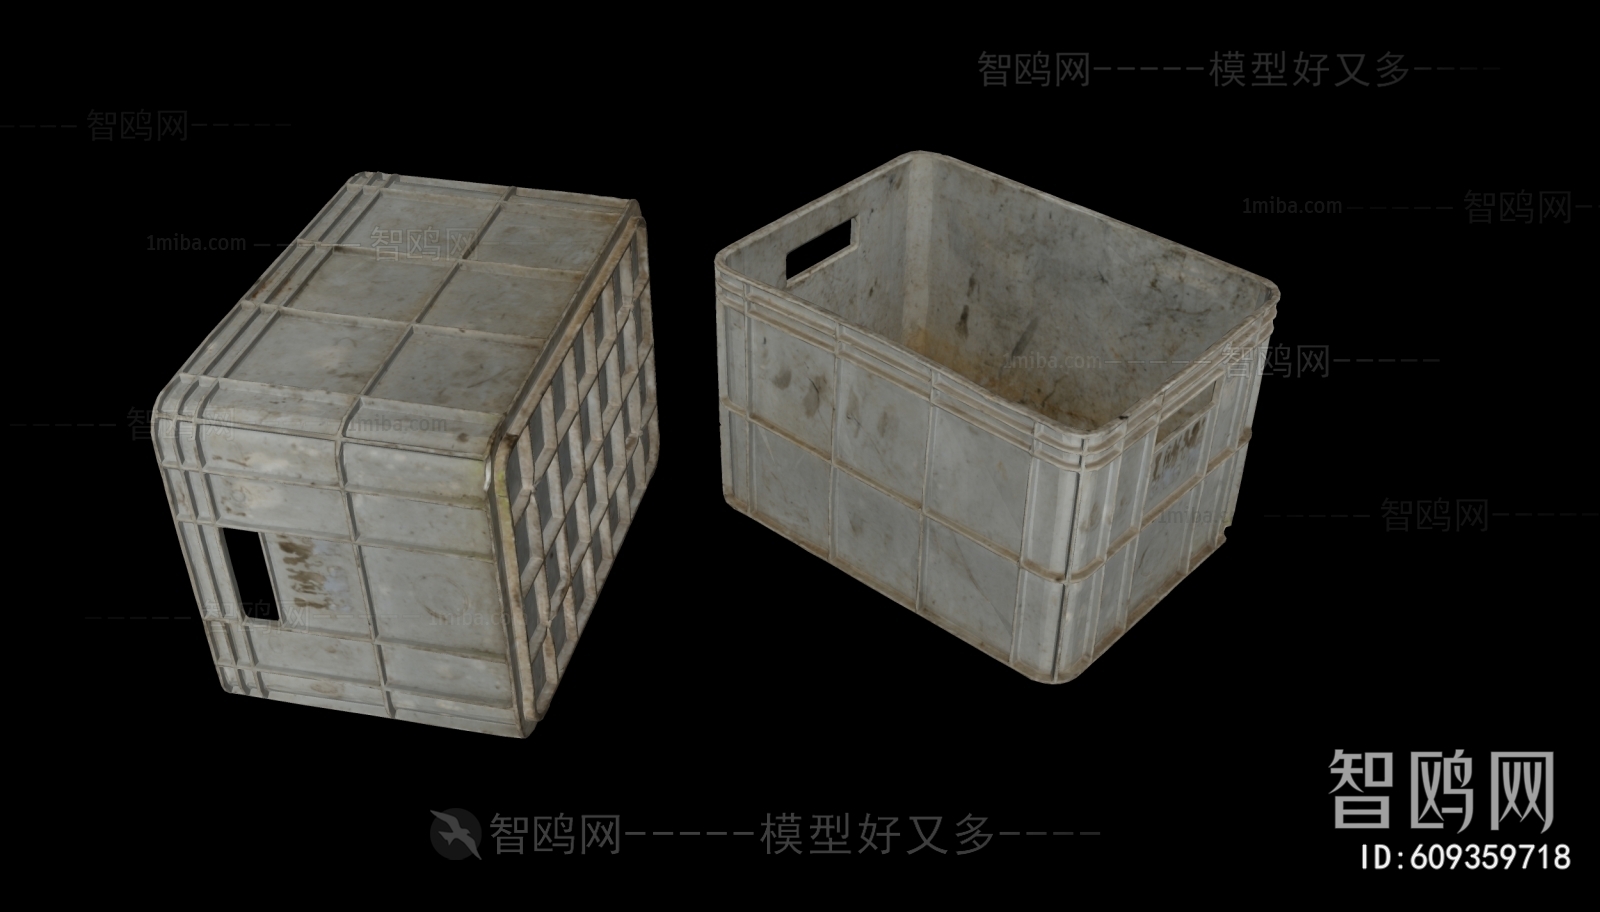 Industrial Style Storage Basket